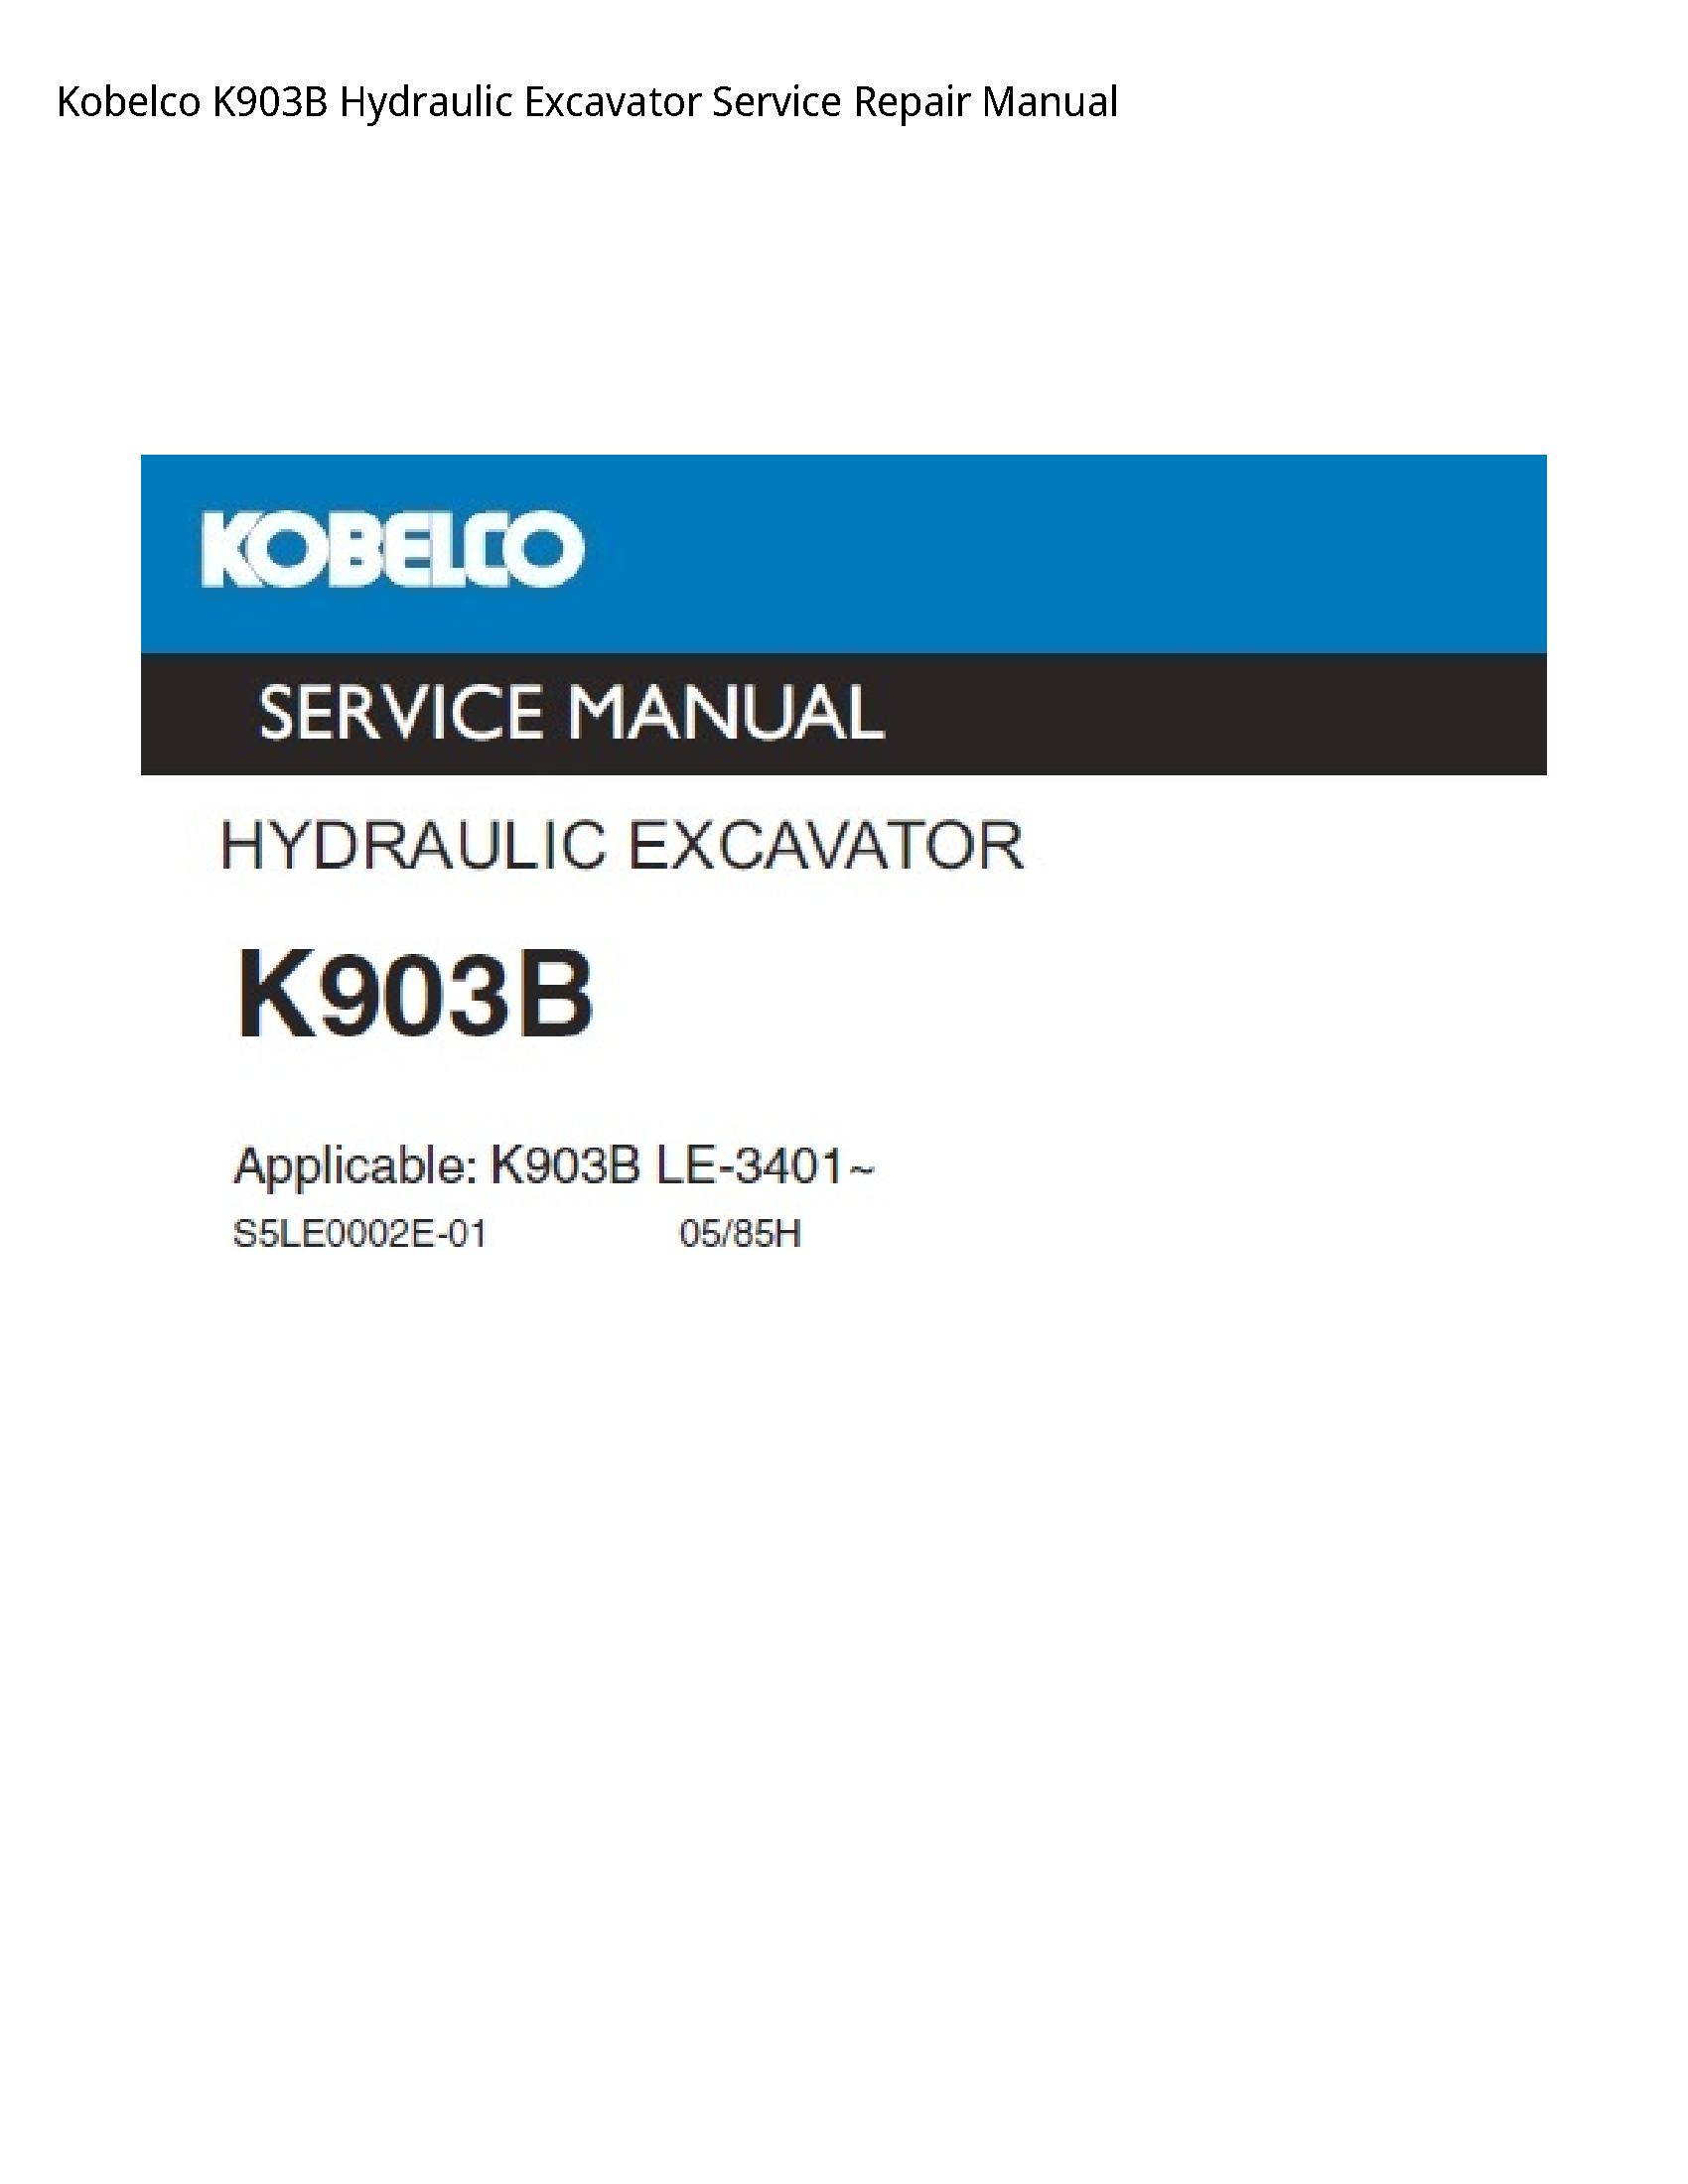 Kobelco K903B Hydraulic Excavator manual